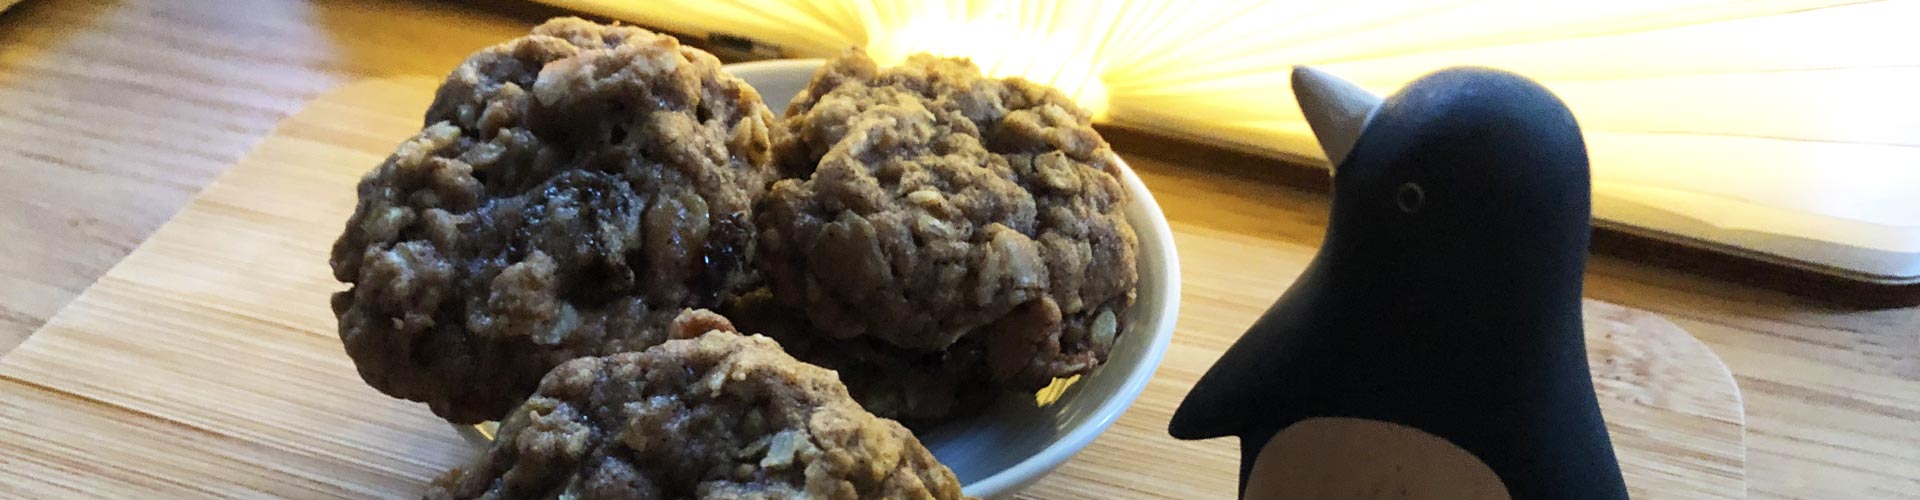 Boy Bakes Treats - Oatmeal Raisin Cookies